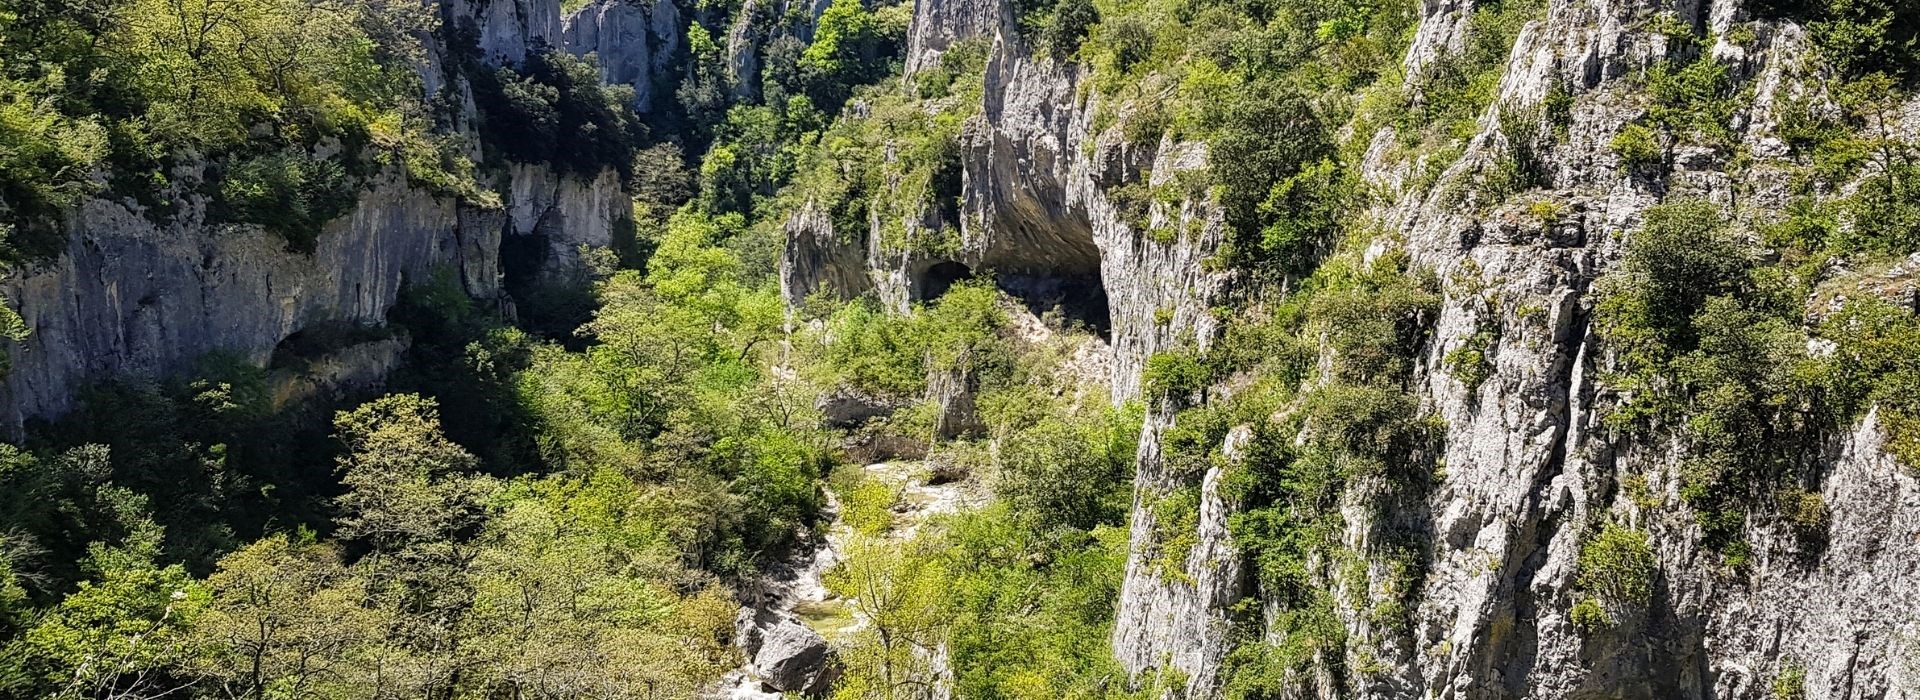 Visiter Les Gorges d'Oppedette - Provence